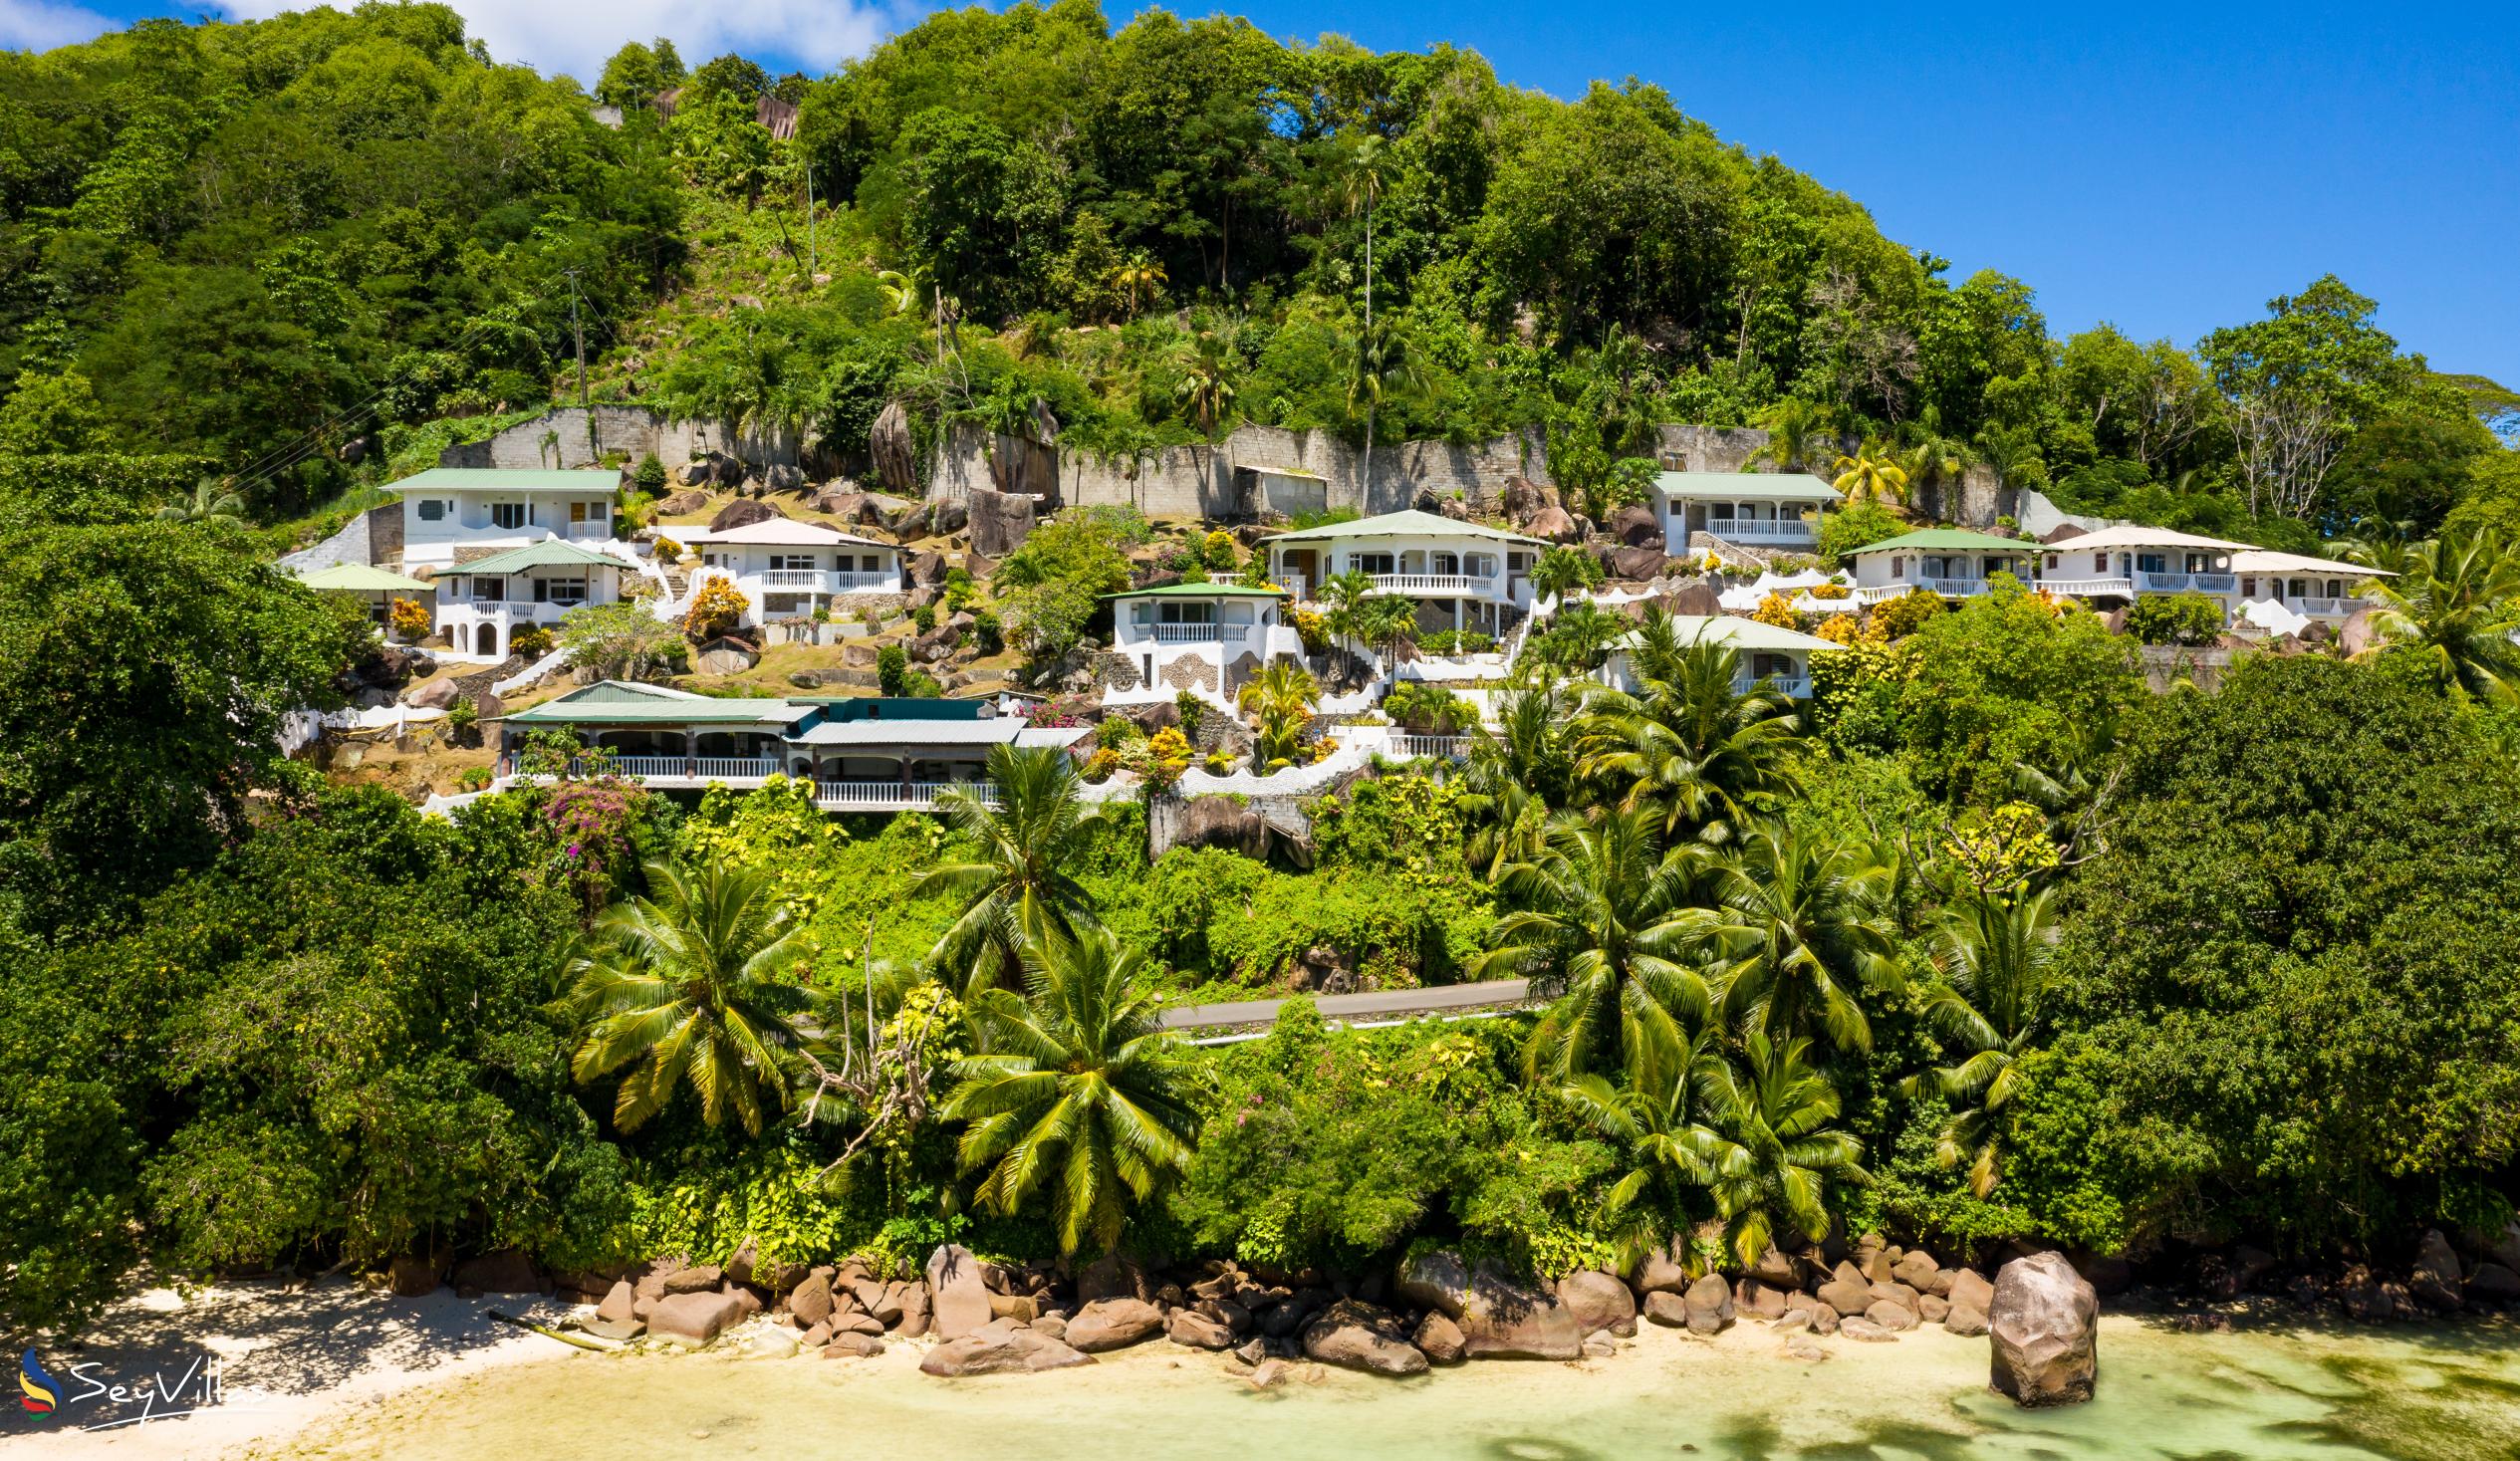 Photo 5: Lazare Picault Hotel - Outdoor area - Mahé (Seychelles)